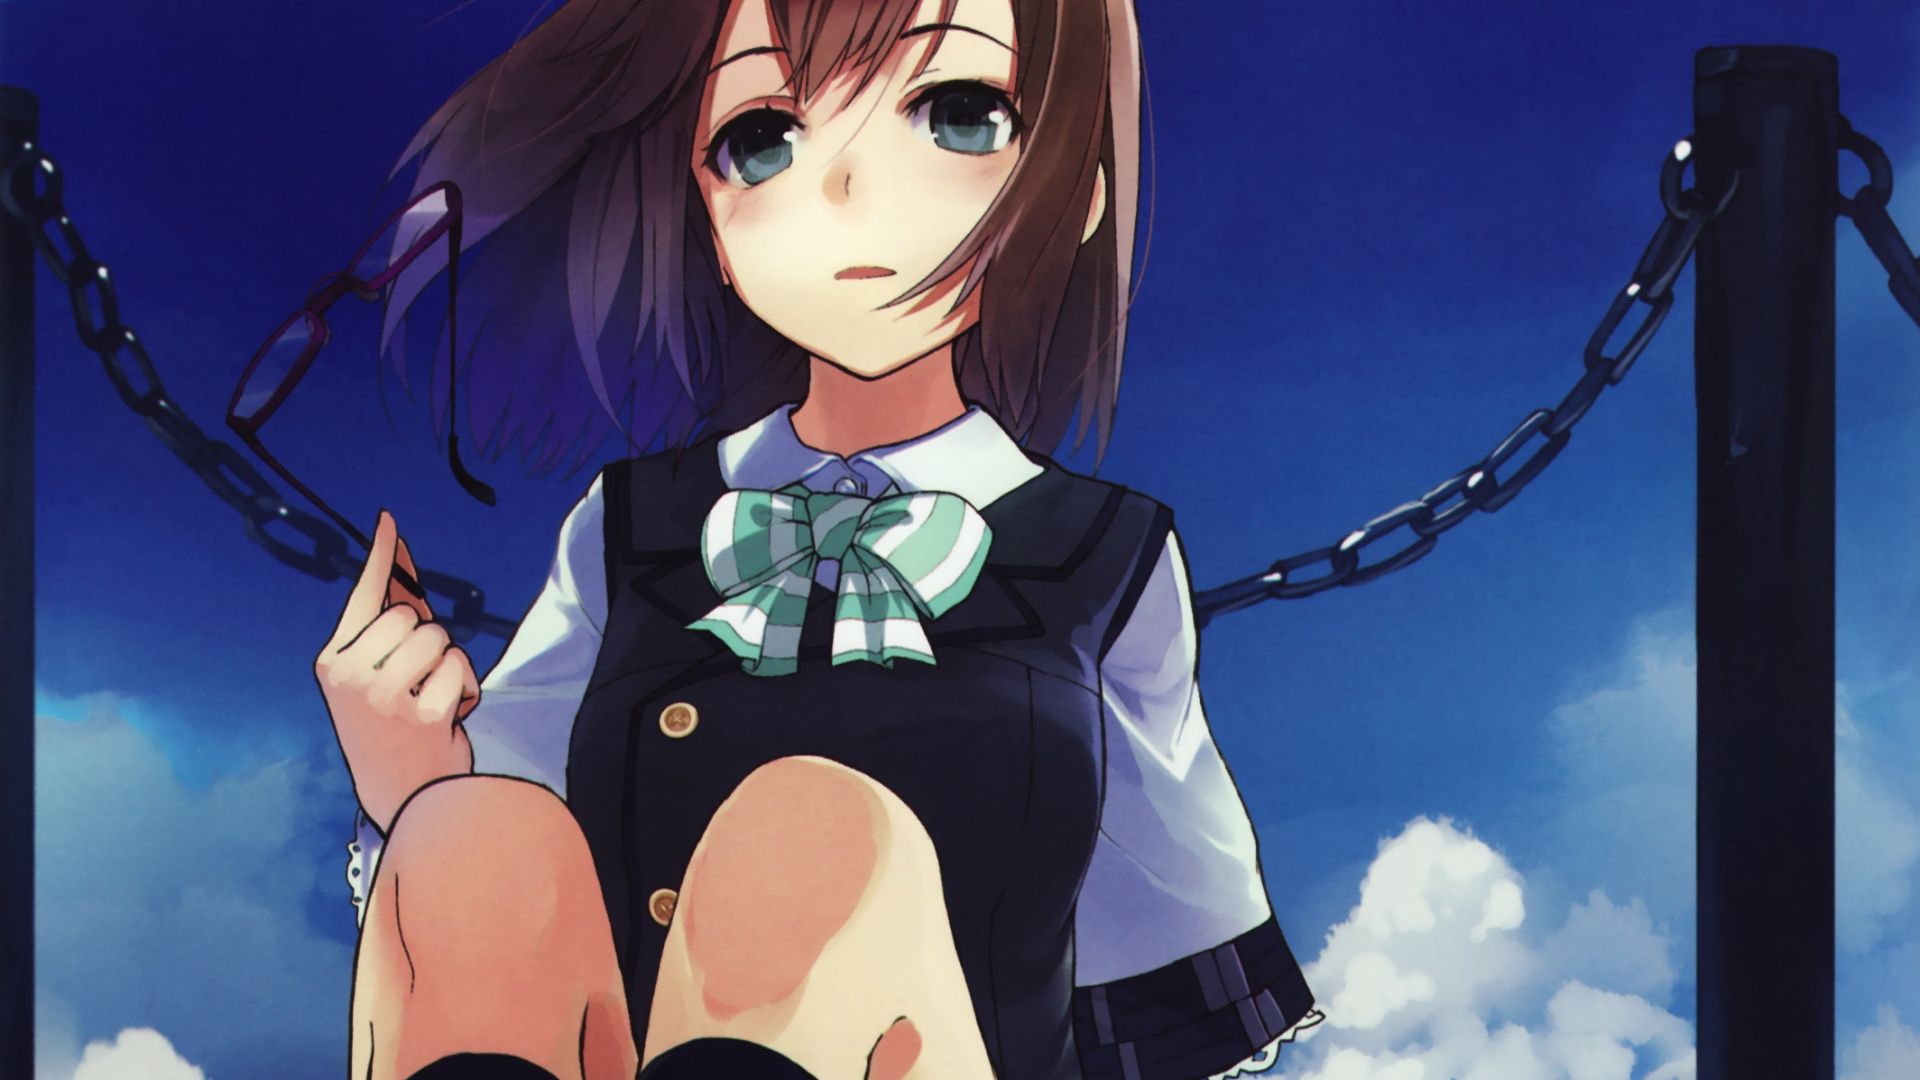 Wallpaper At dock, sitting, anime girl, original, cute anime